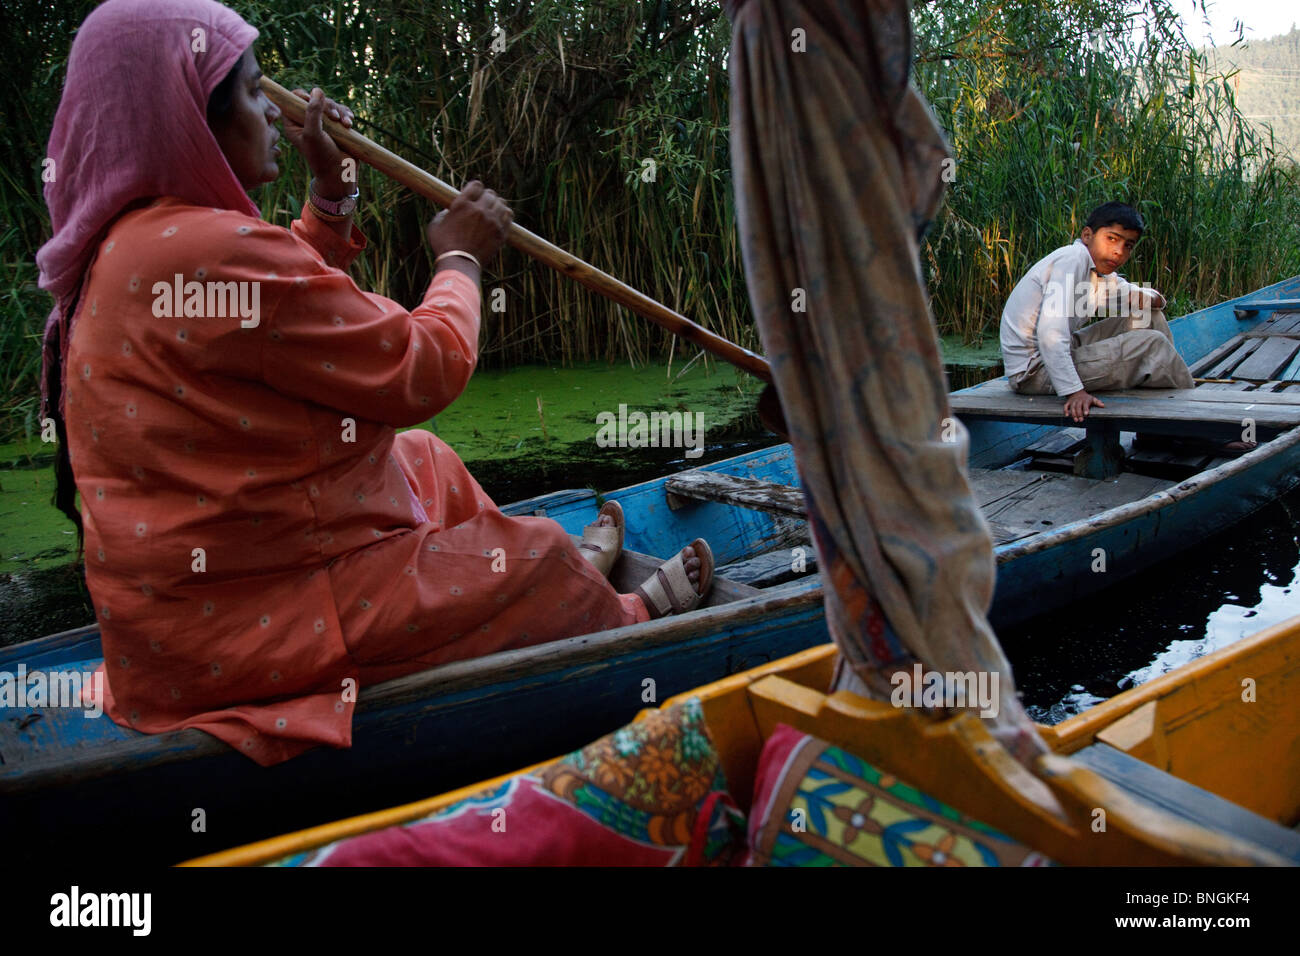 La gente in una barca shikara incontrato durante una shikara gita in barca dal lago a Srinagar, Jammu e Kashmir in India. Foto Stock